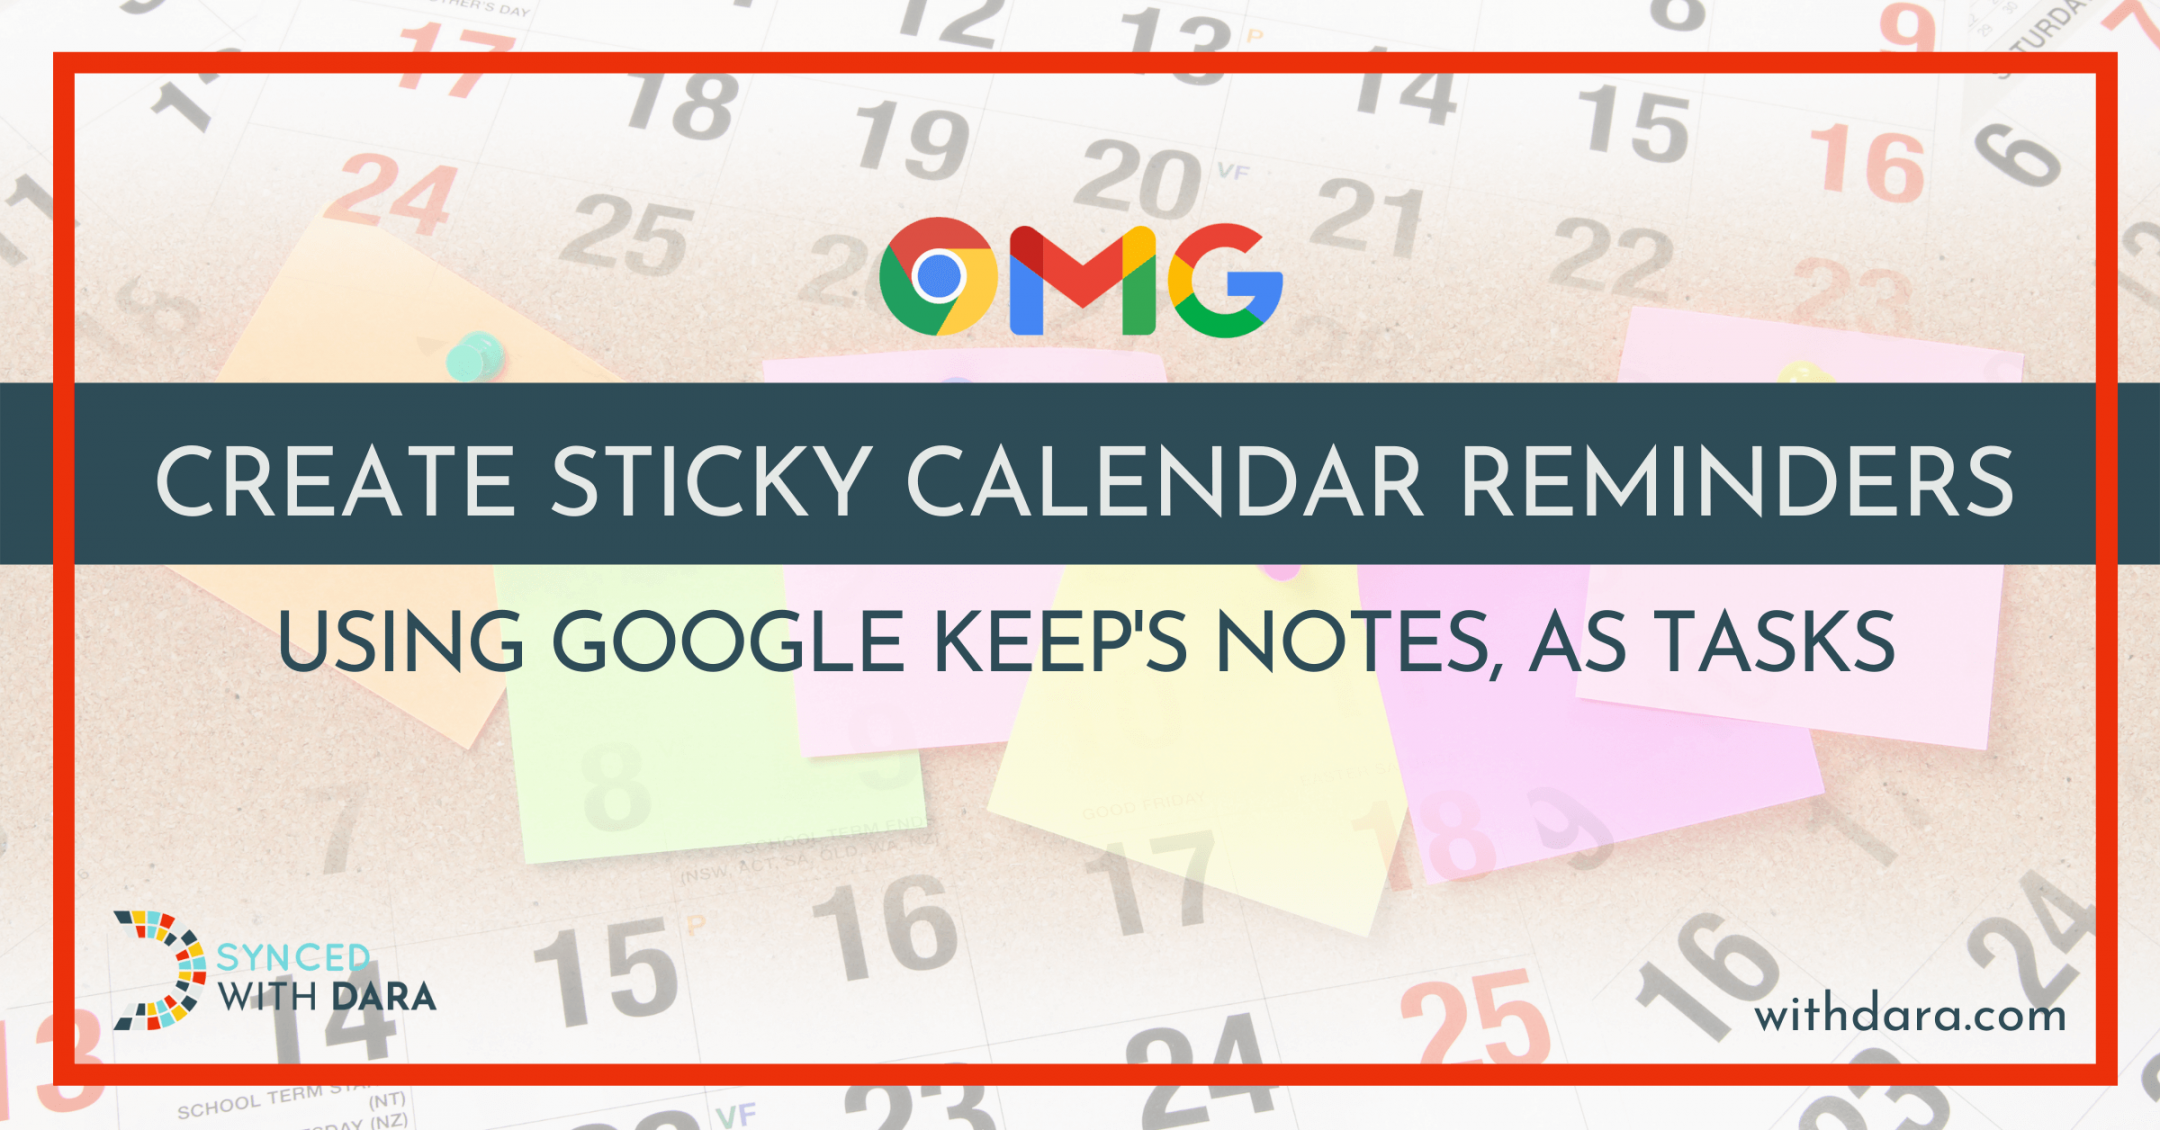 Create Sticky Calendar Reminders using Google Keep